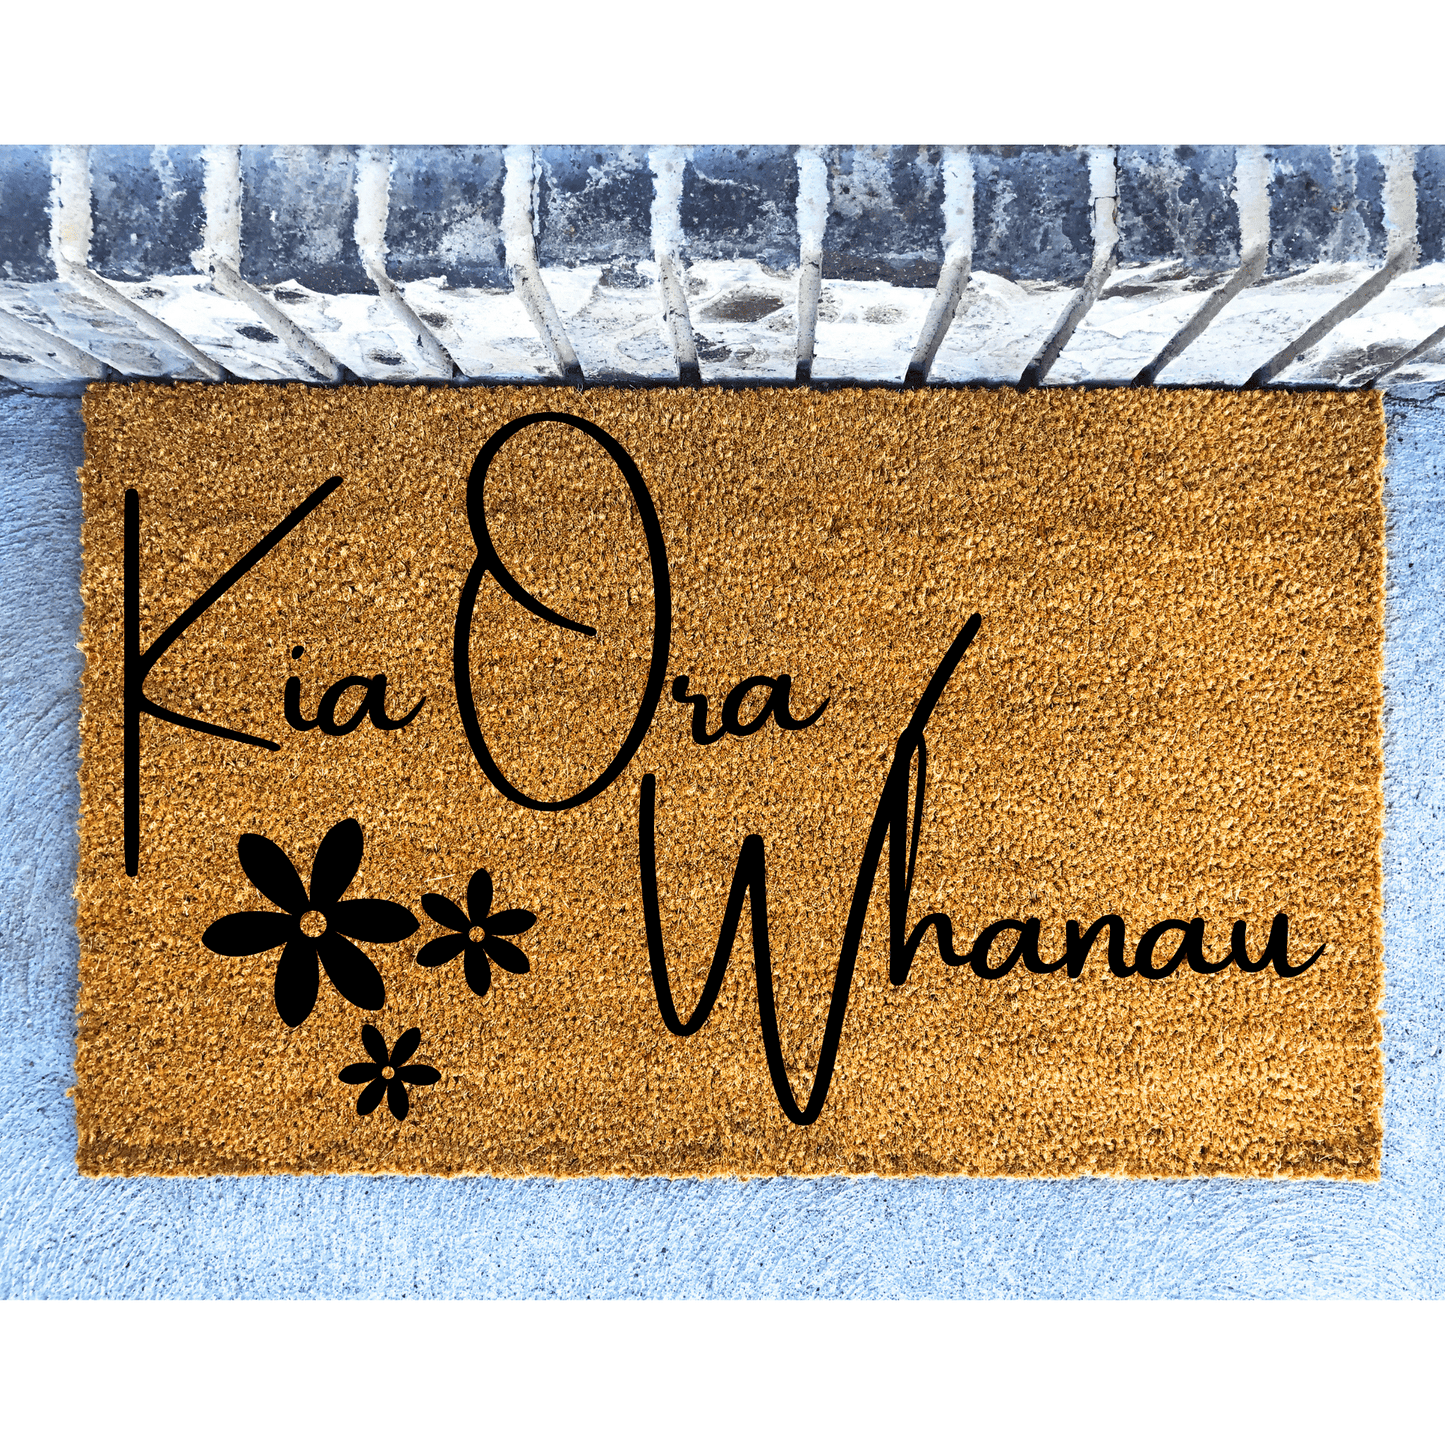 Kia ora whanau front door mat - Personalised Doormat Australia